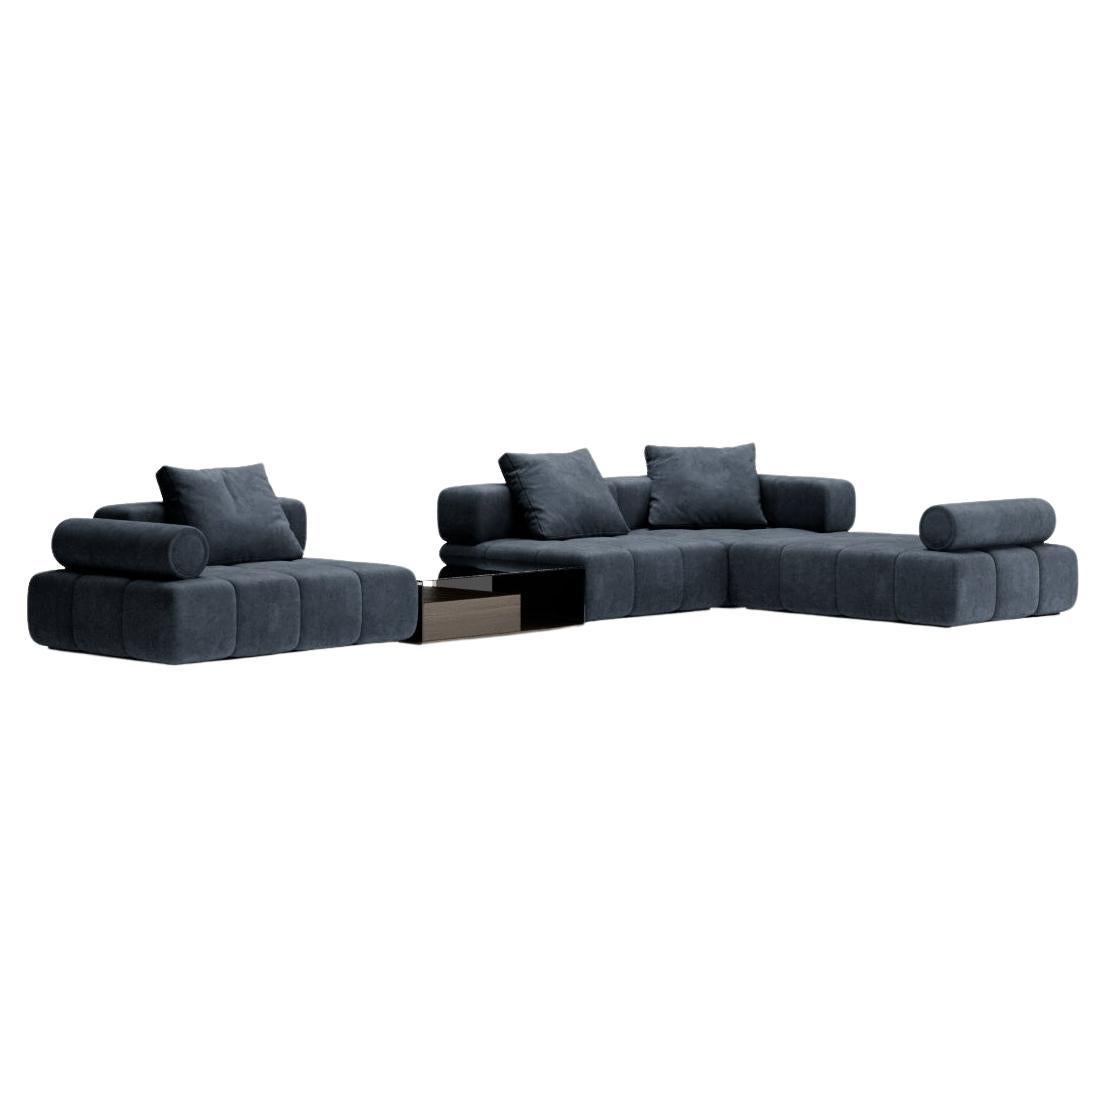 Thomas modular nubuck leather sofa  For Sale